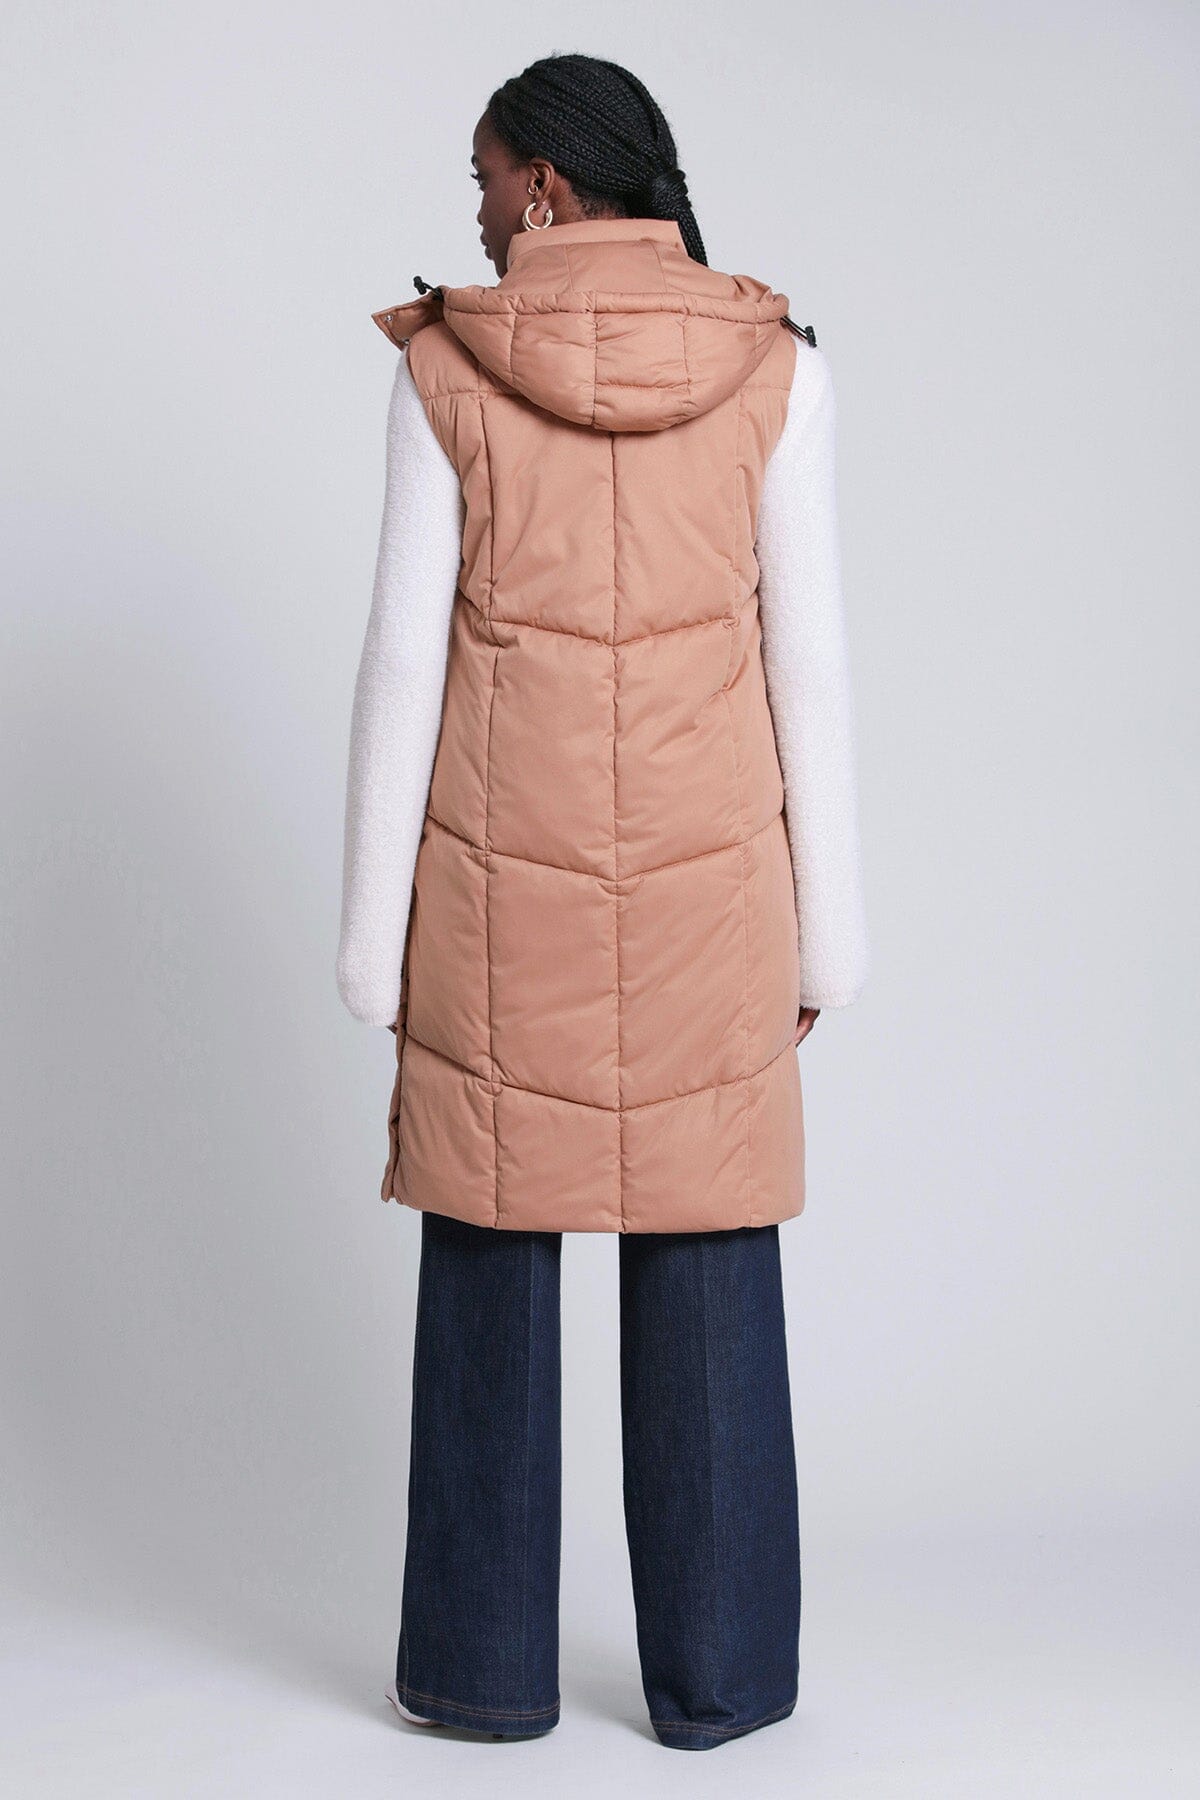 thermal puff hooded longline puffer vest camel tan - women's figure flattering designer fashion vests outerwear